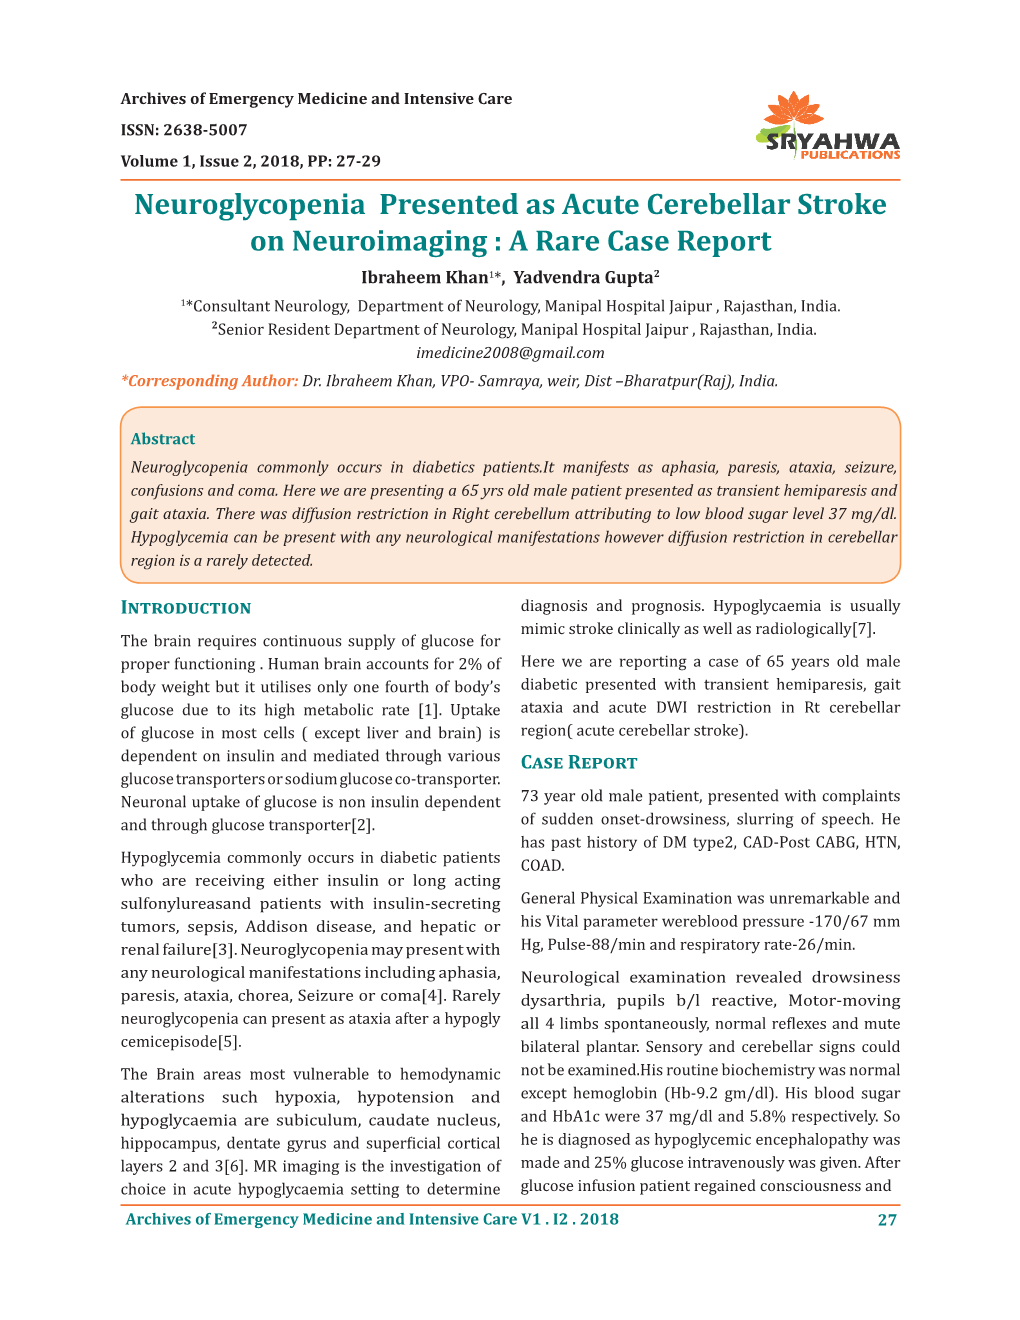 Neuroglycopenia Presented As Acute Cerebellar